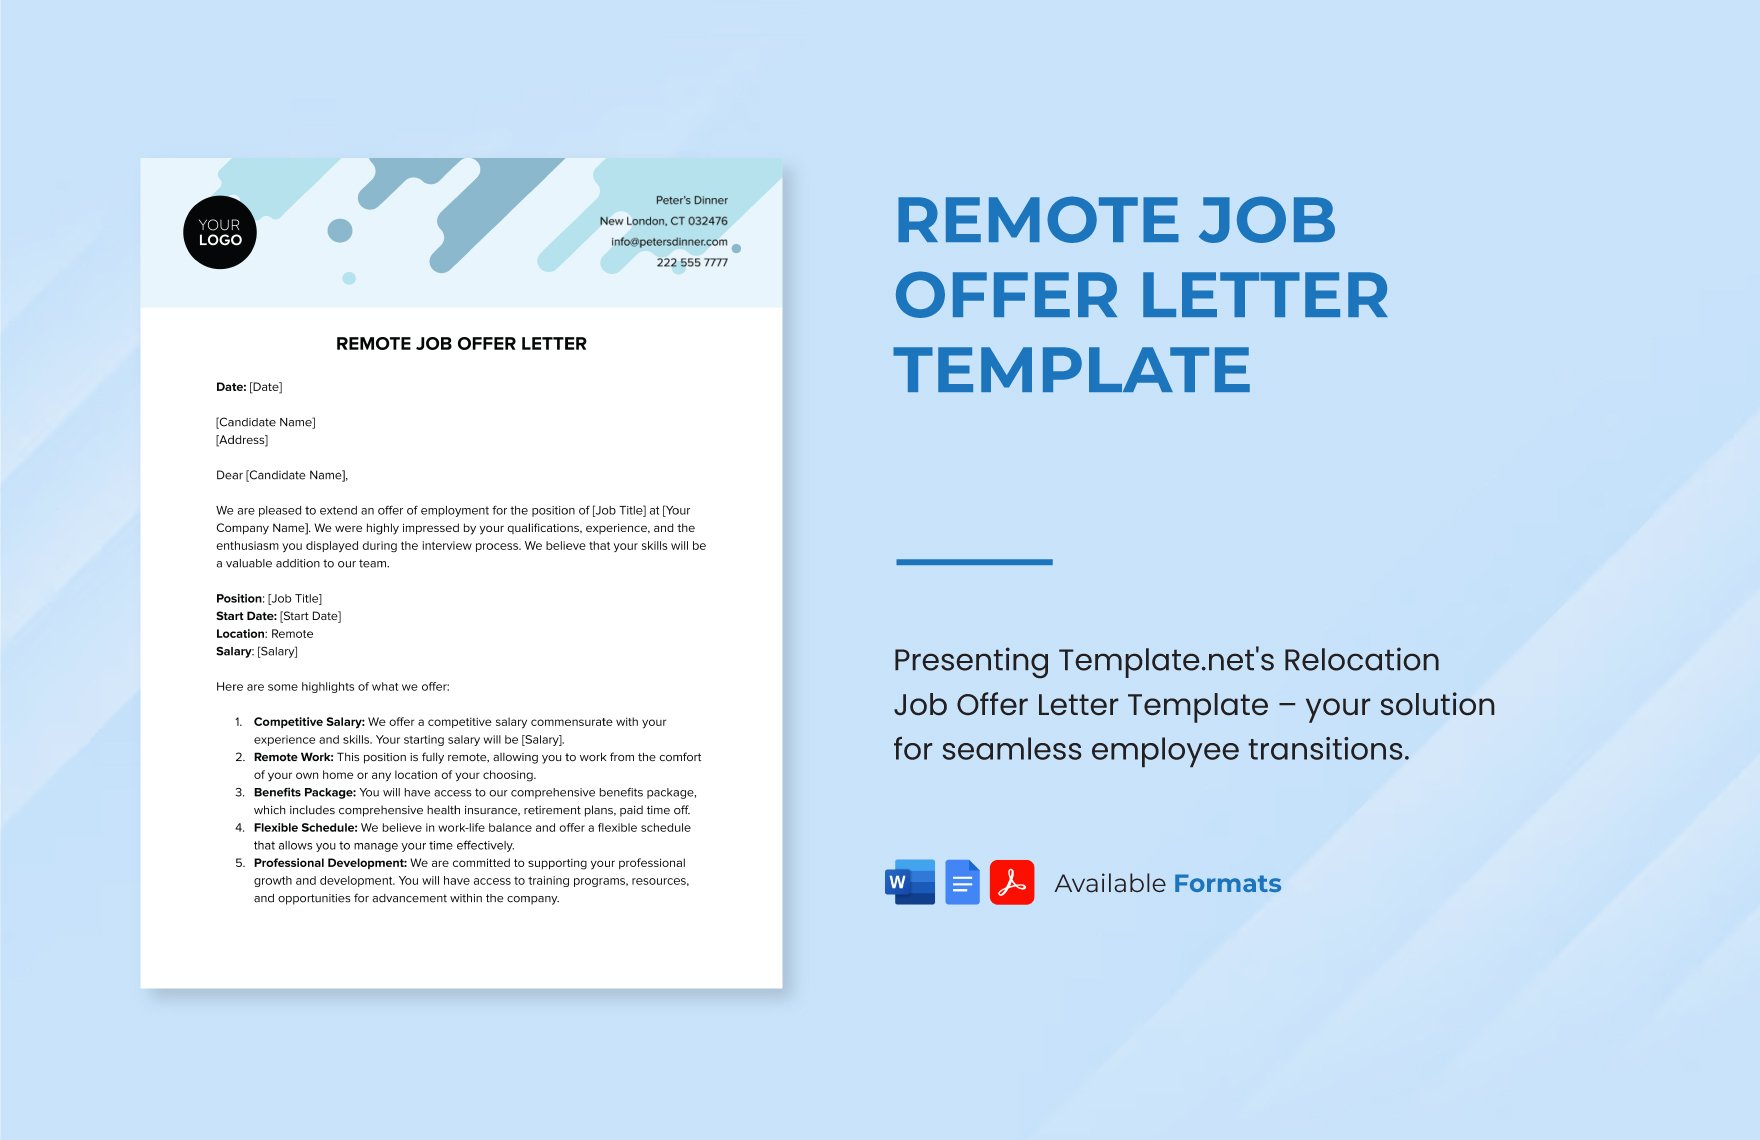 Remote Job Offer Letter Template in Word, Google Docs, PDF